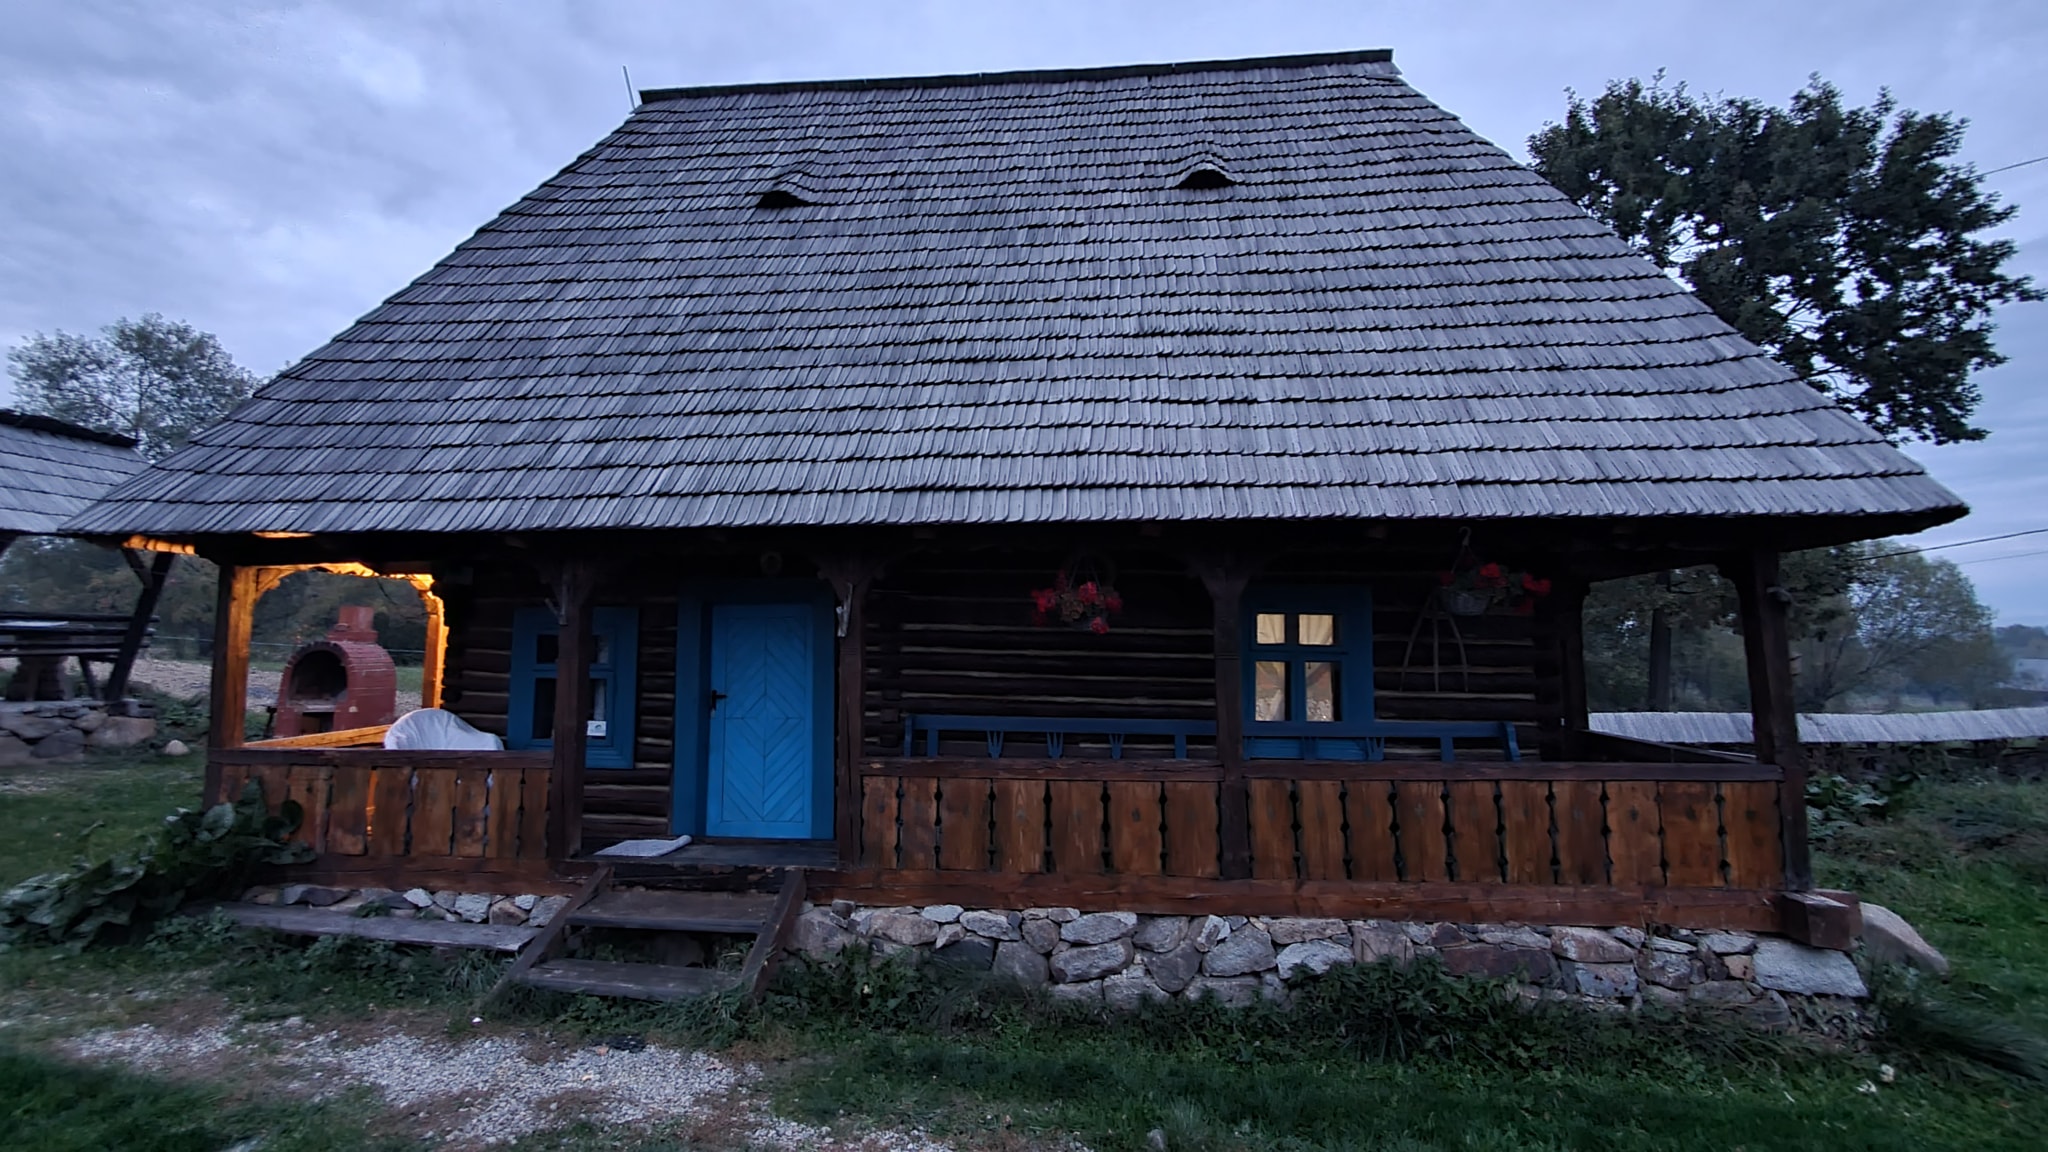  Casa traditionala inclusa in ciruitul turistic - Iulian Radu